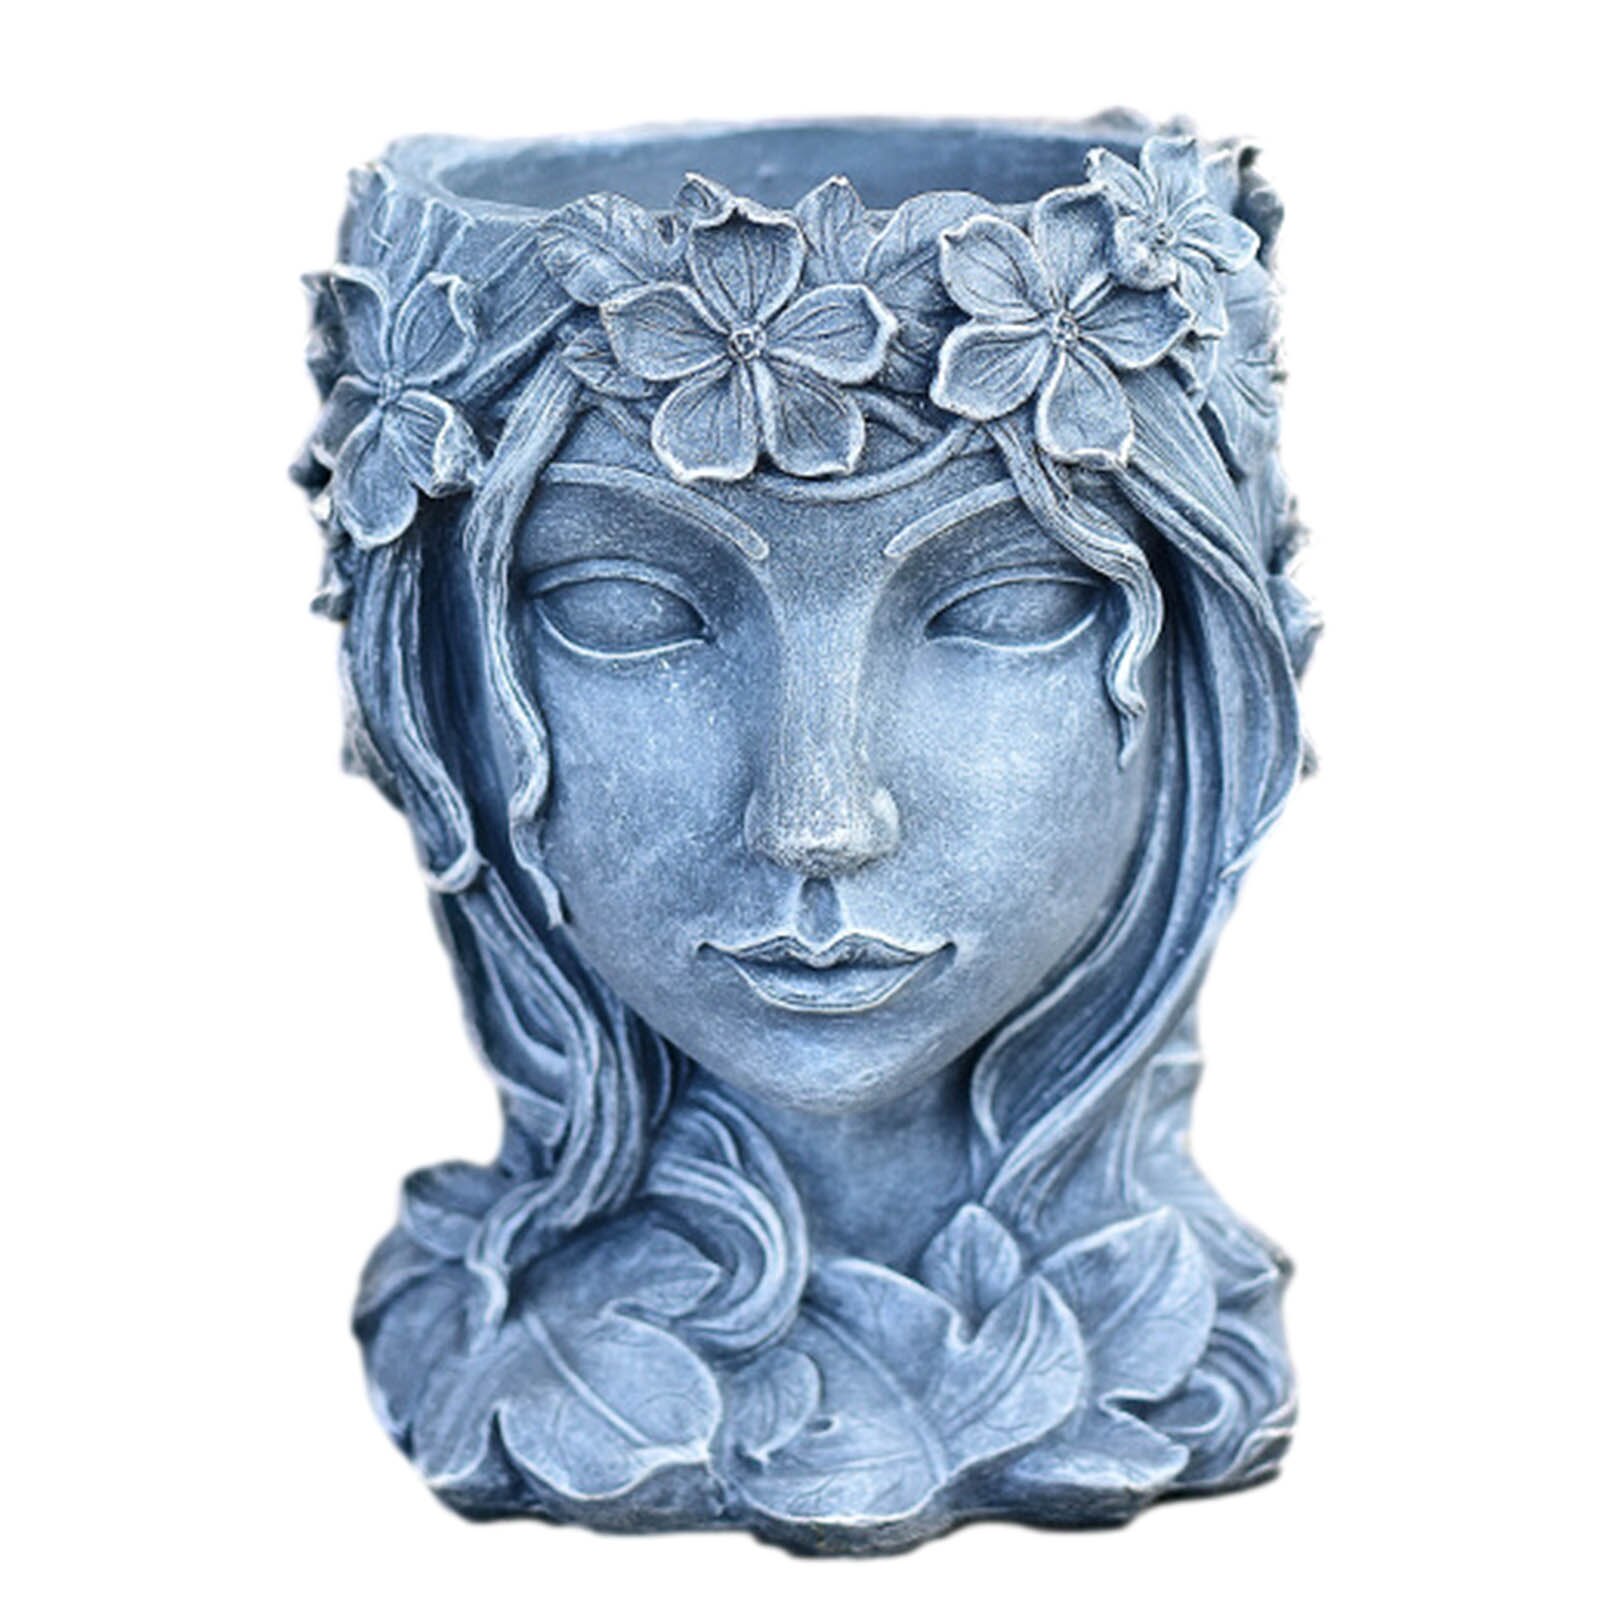 7.9 Inch Goddess Head Planter Statue Resin Flower Pot Succulent Plants Pot Garden Ornament Home Decoration: gray color